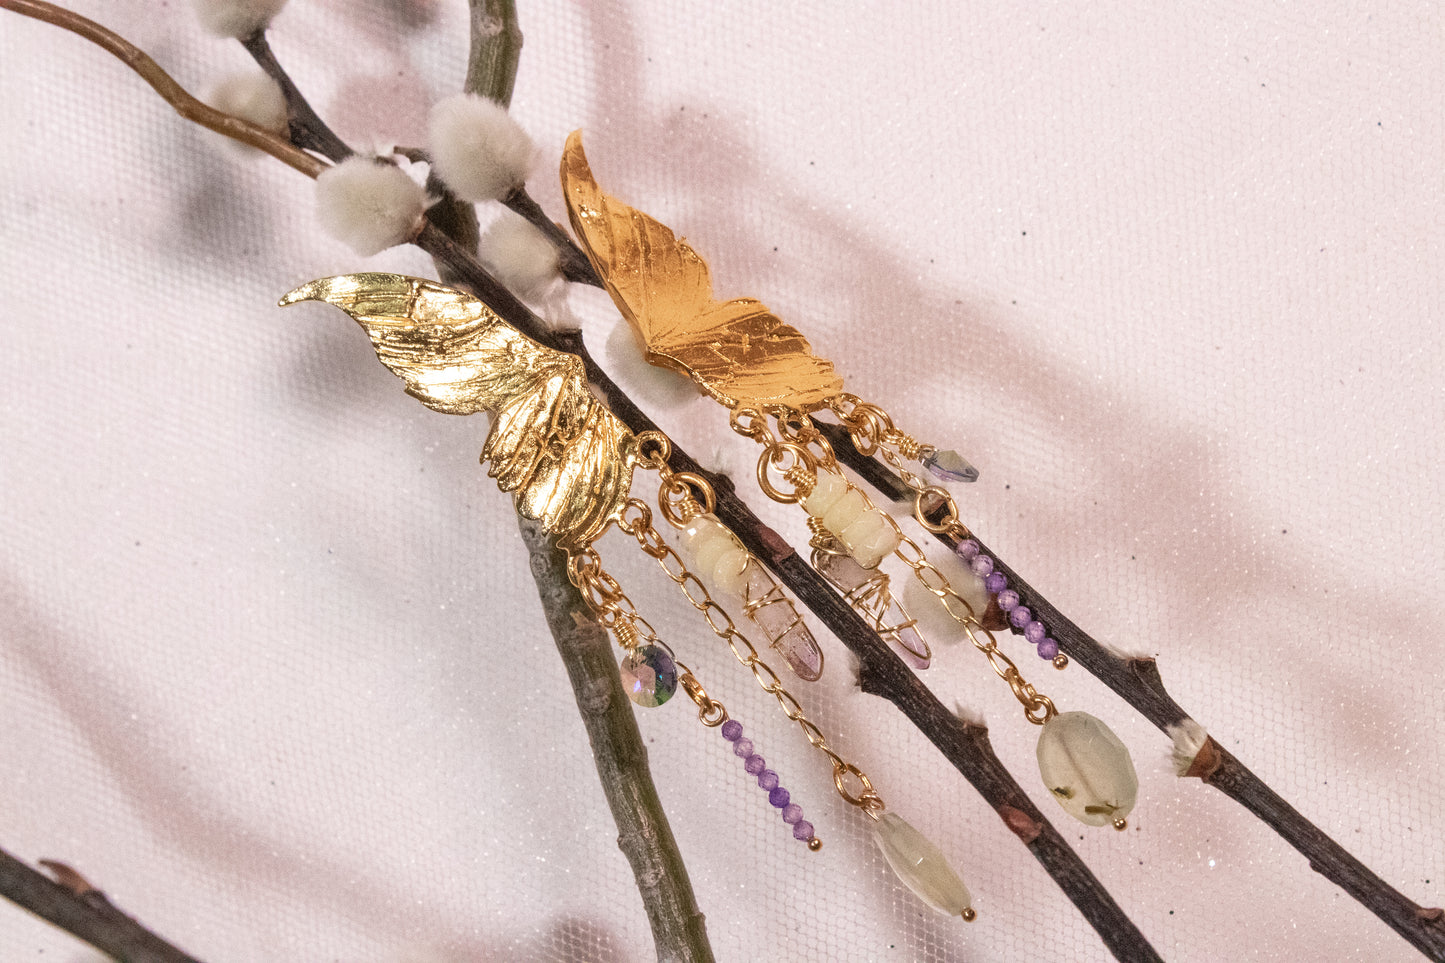 Amaité. Earrings with prehnite, zircons, amethyst, opal and Swarovski crystal